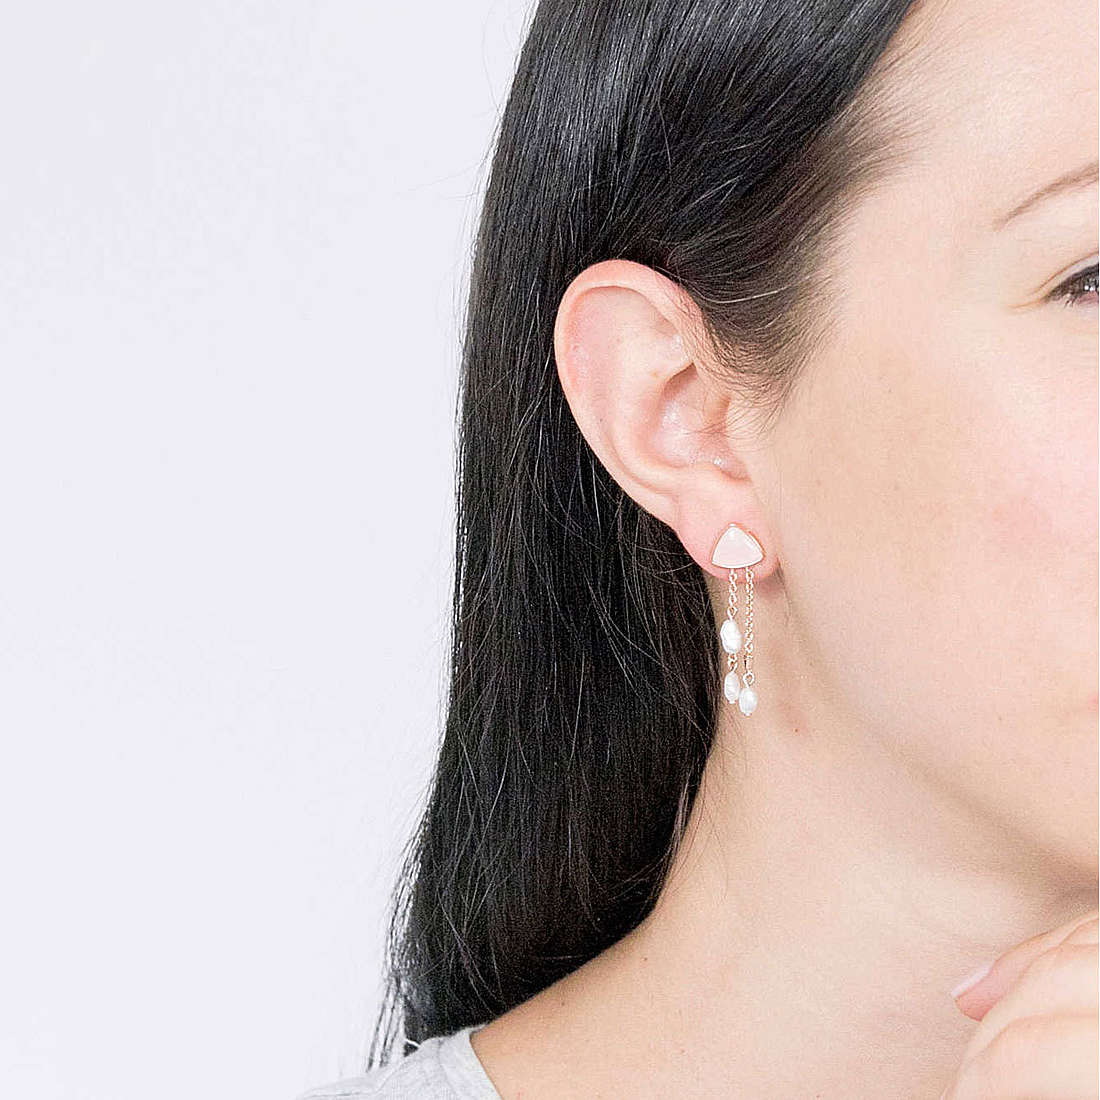 Emporio Armani earrings woman EG3445221 wearing